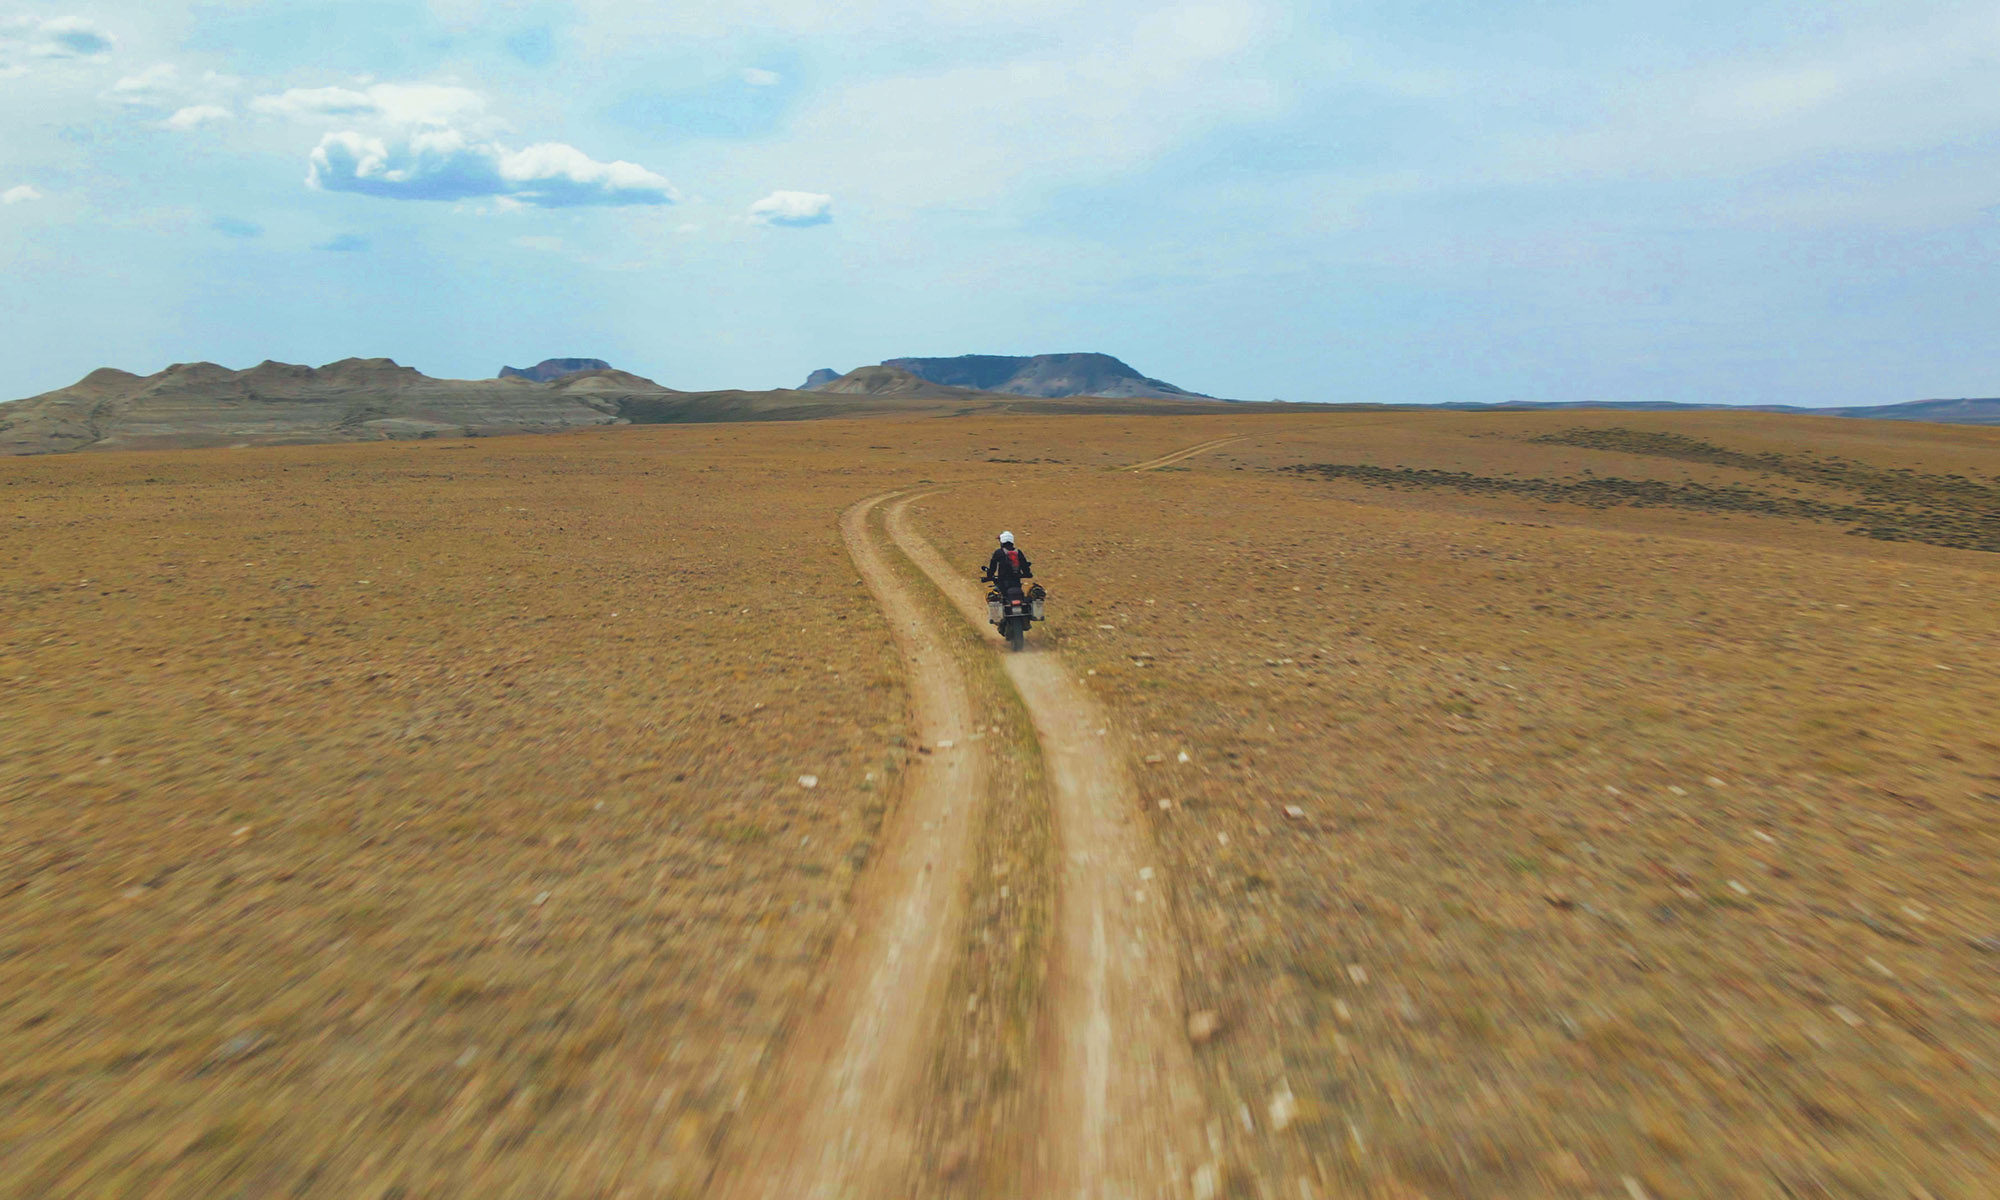 Motorcycle on road Wyoming Red Desert